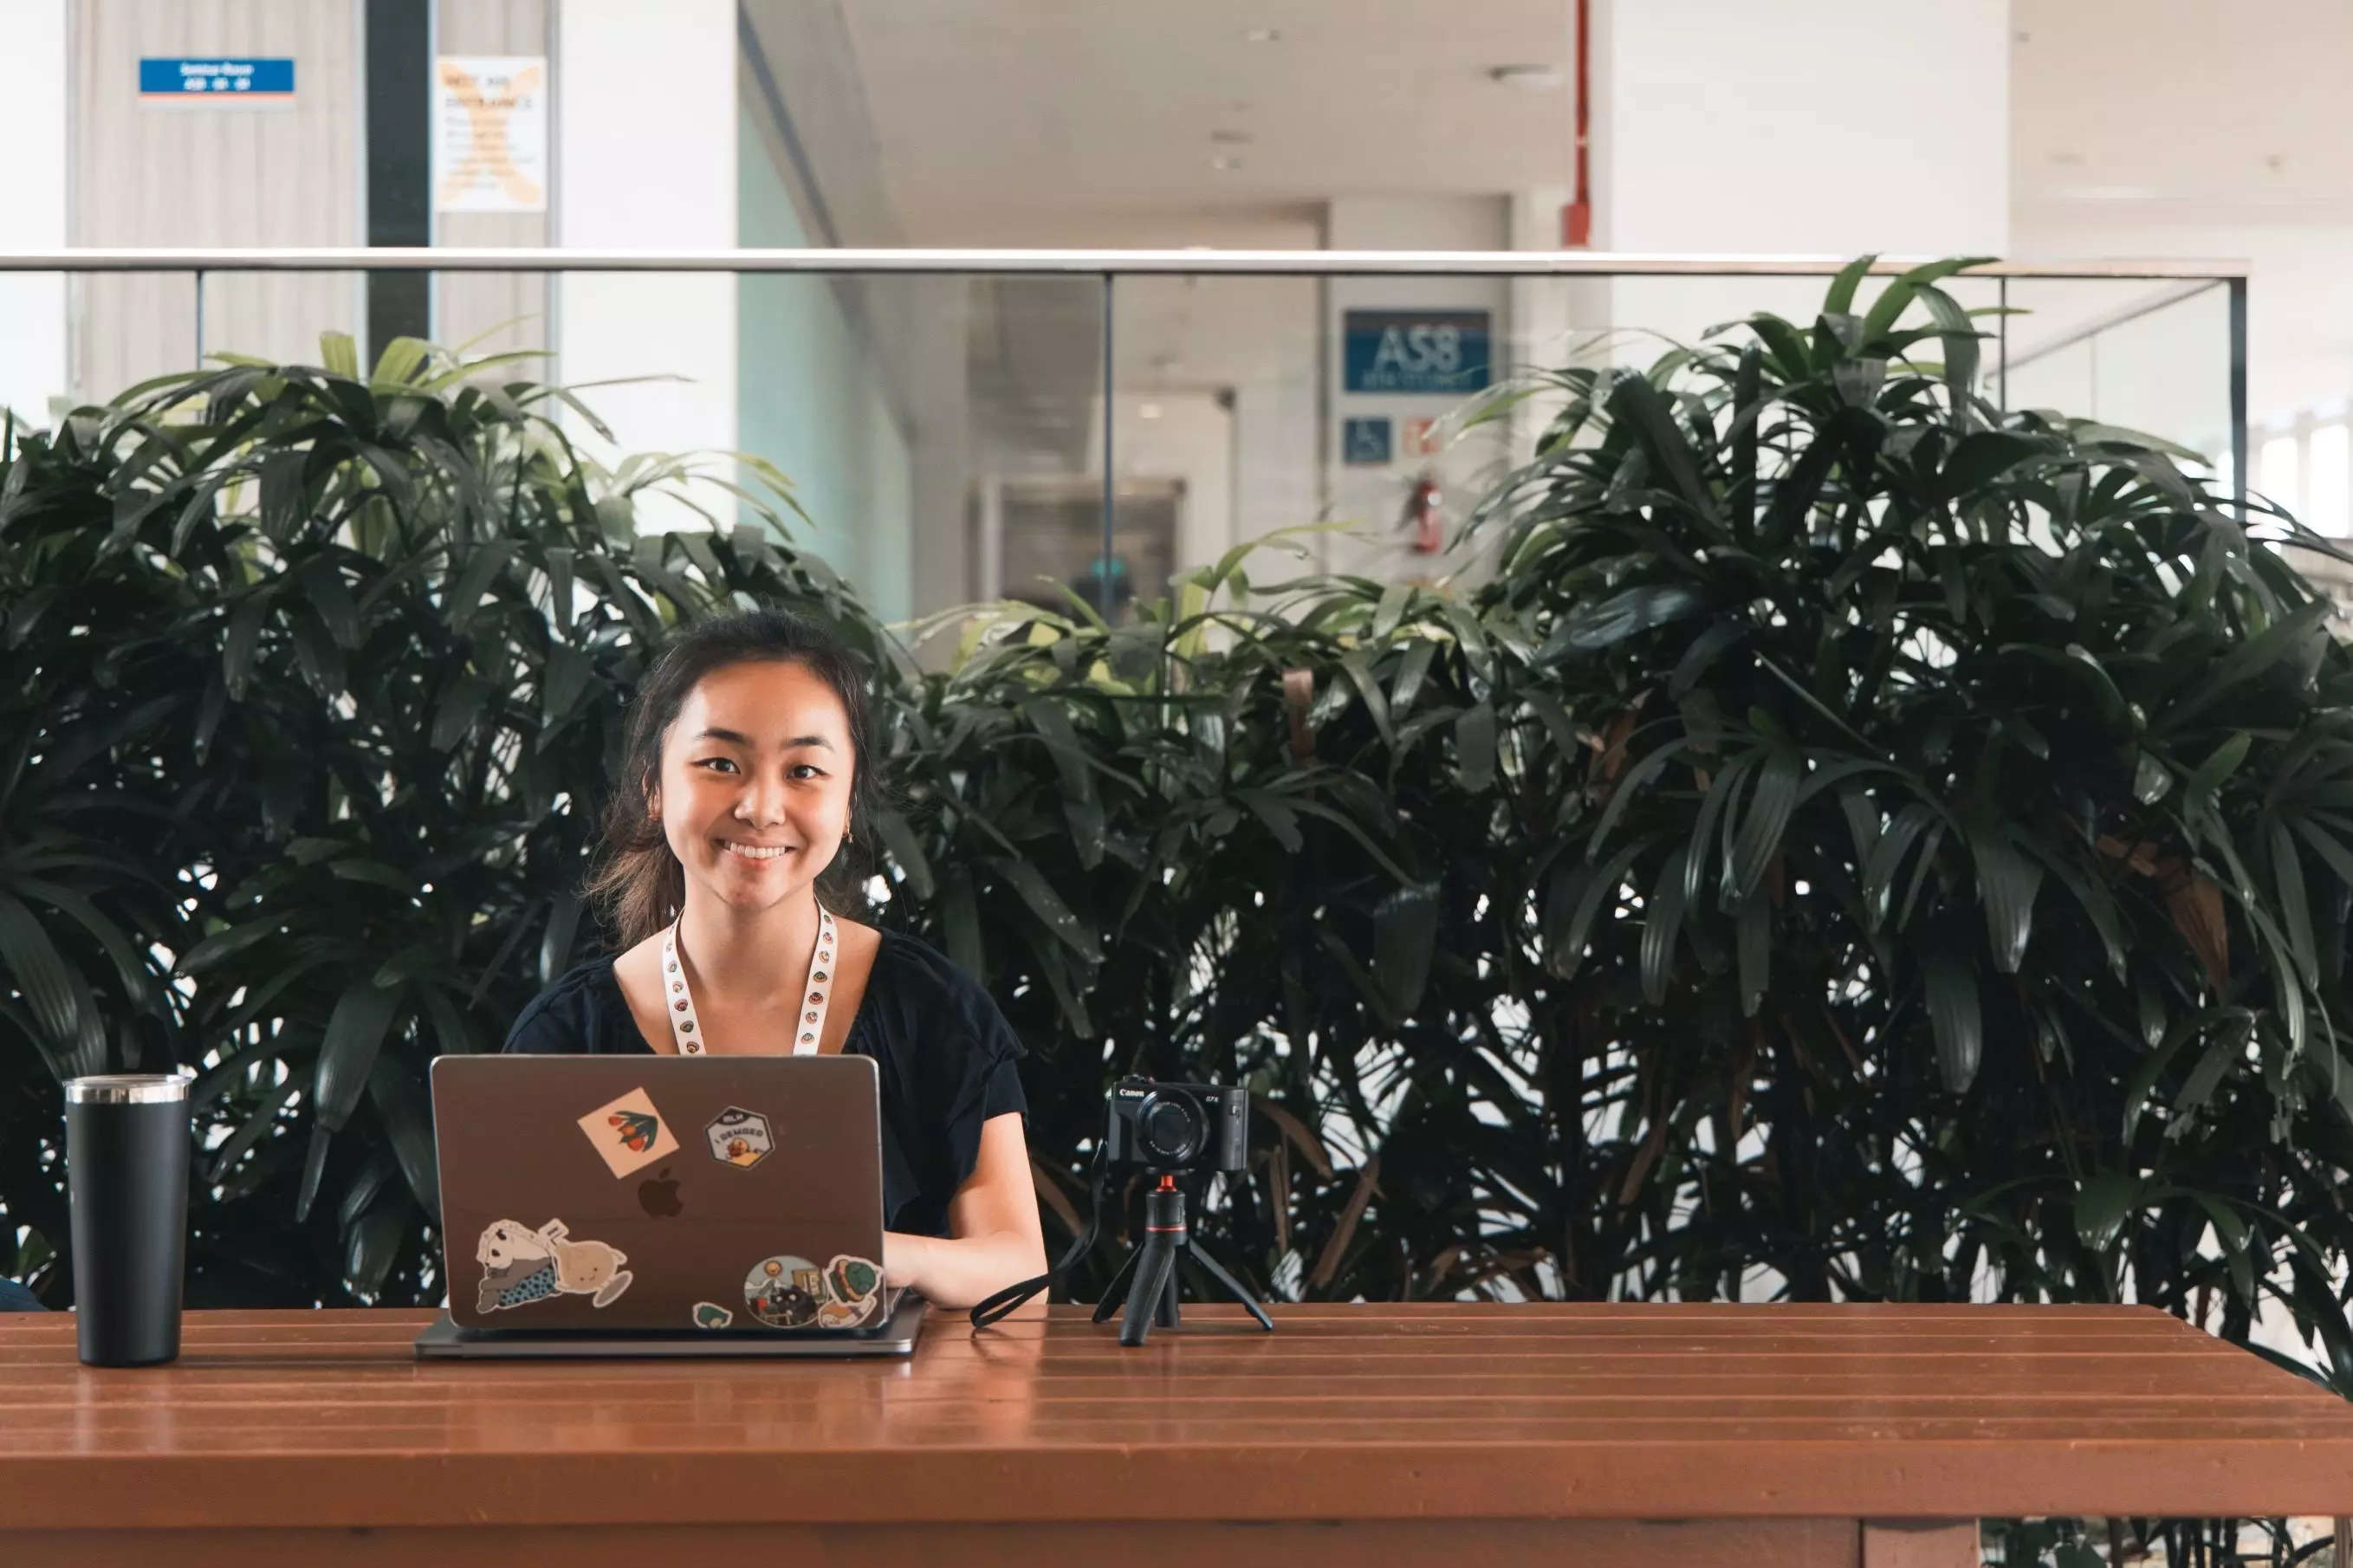 Singaporean undergraduate Amelia Yamato Leow told Insider that she started interning right after secondary school.